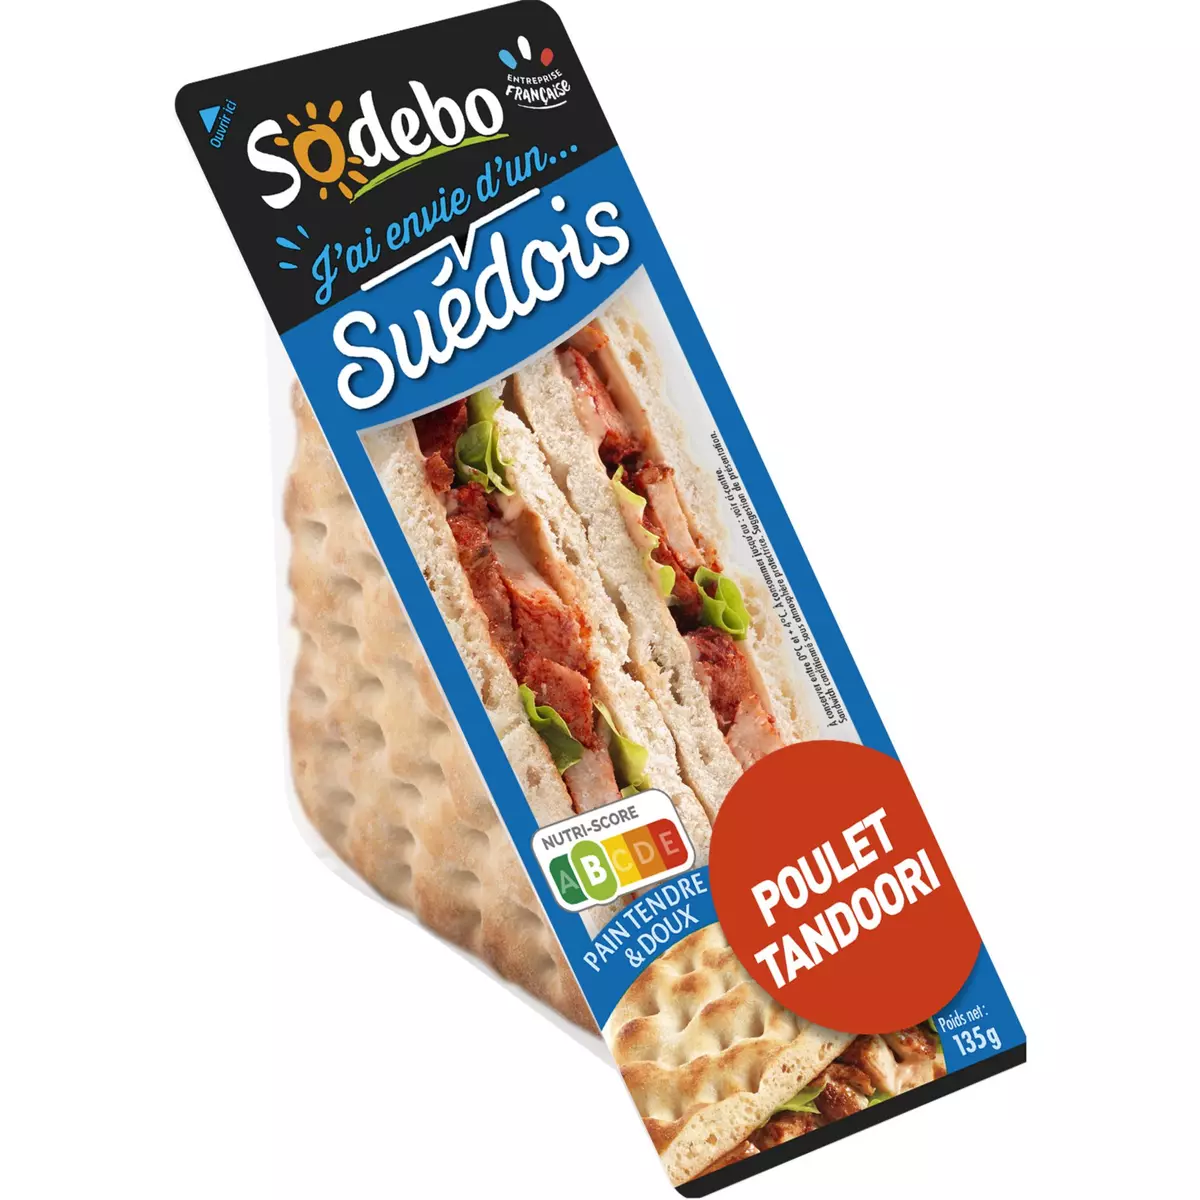 SODEBO Sandwich suédois poulet tandori 1 portion 135g